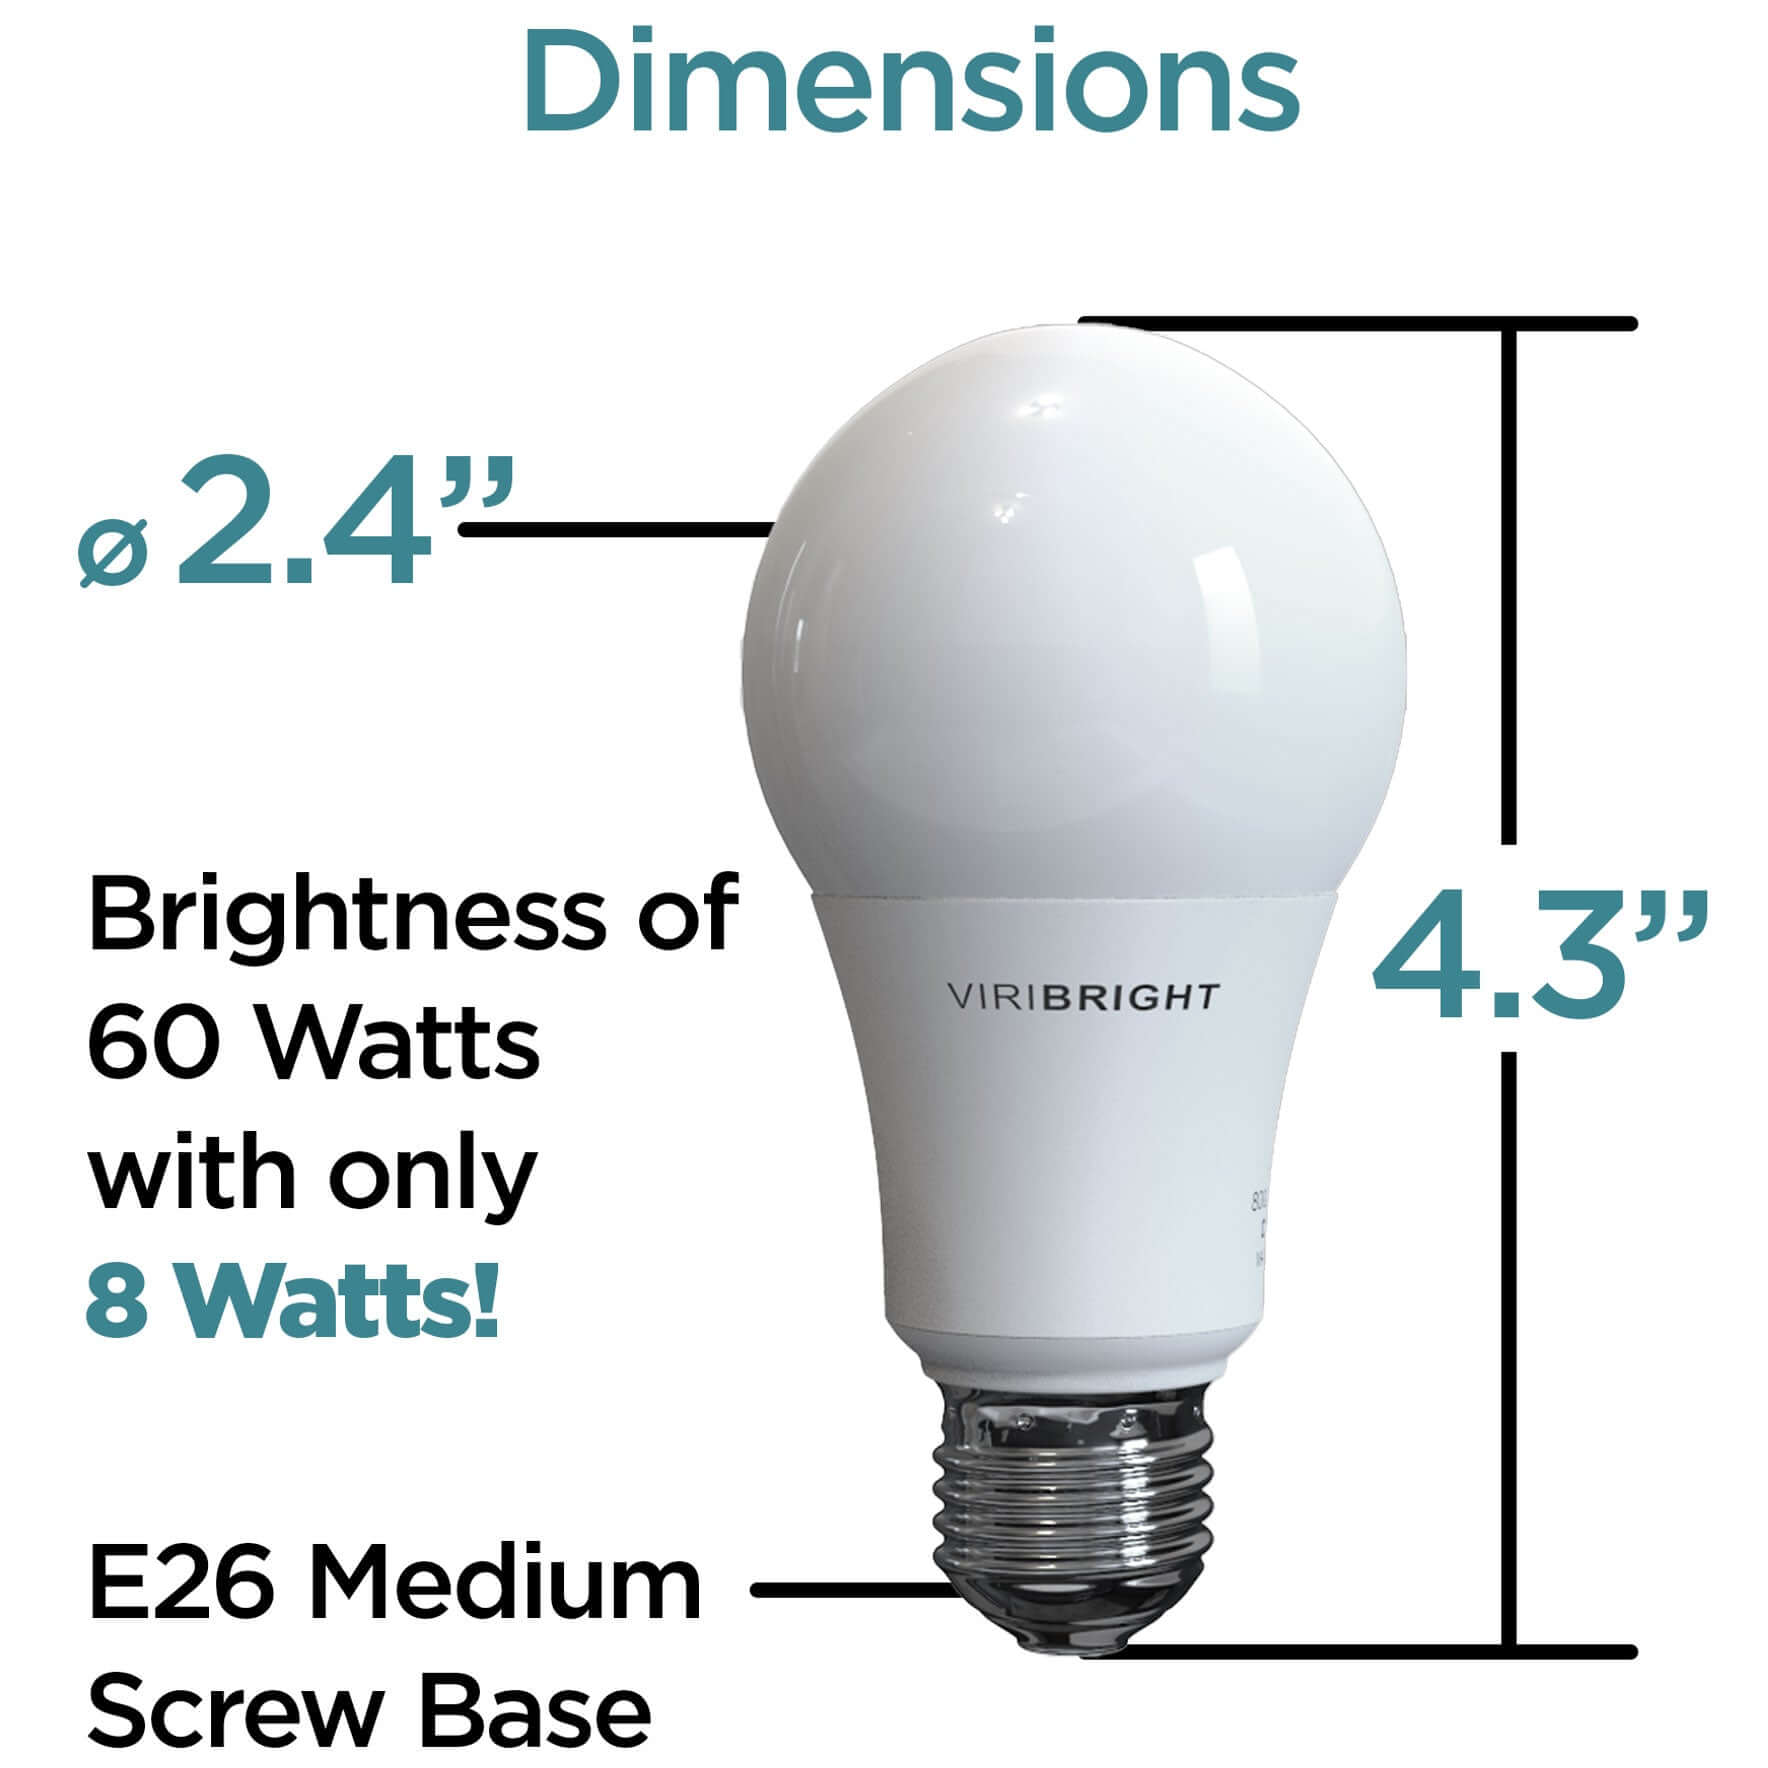 Viribright - 100-Watt Equivalent A19 E26 General Purpose Standard LED Light Bulb - 651640-4